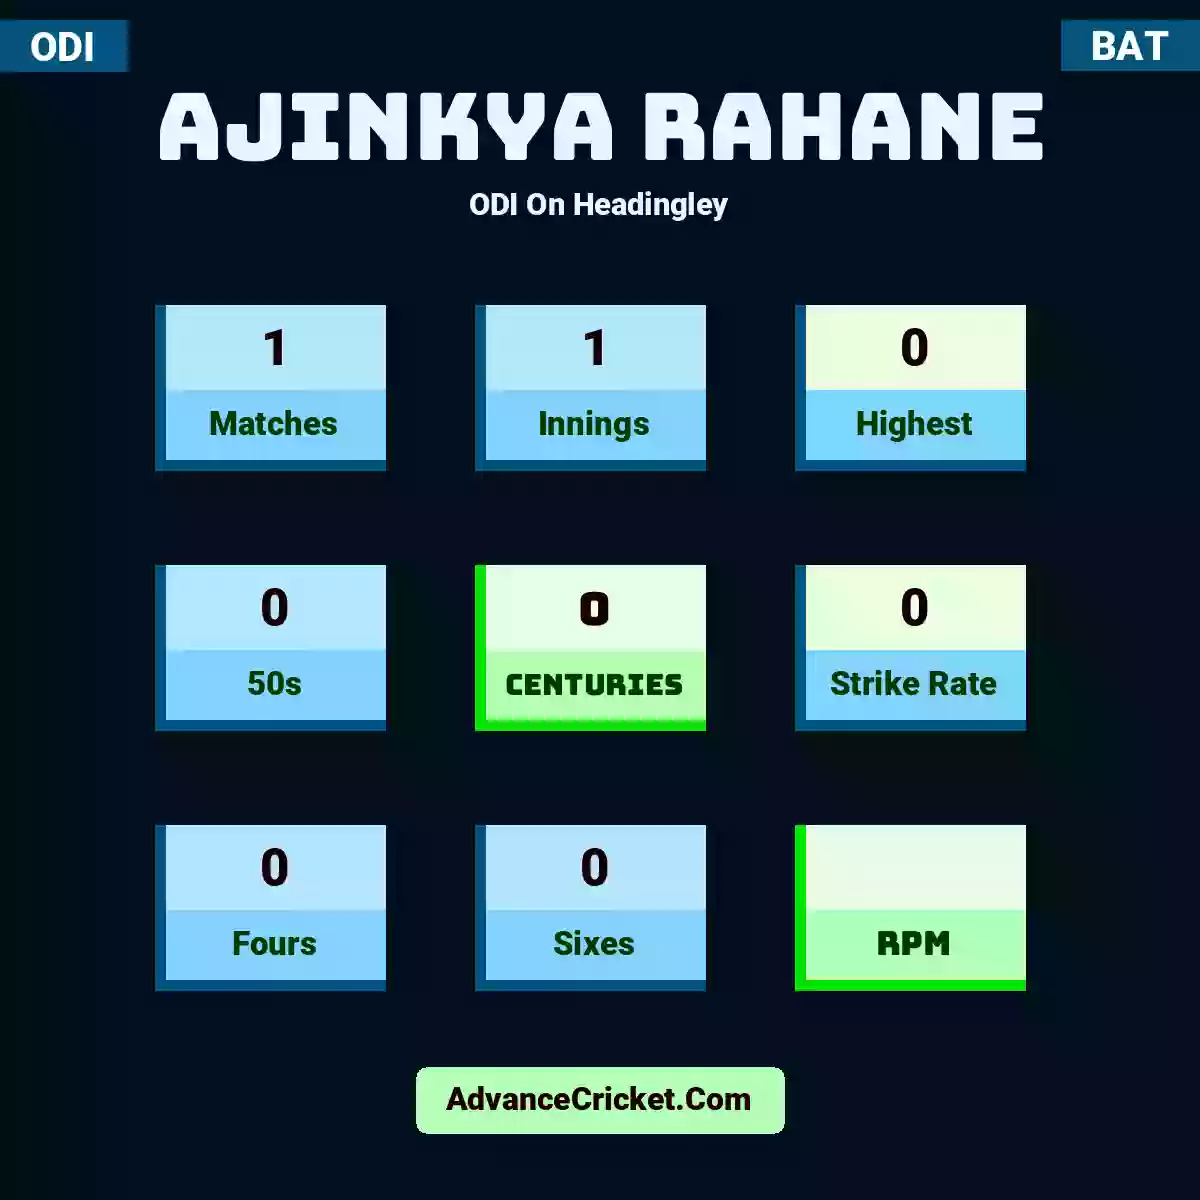 Ajinkya Rahane ODI  On Headingley, Ajinkya Rahane played 1 matches, scored 0 runs as highest, 0 half-centuries, and 0 centuries, with a strike rate of 0. A.Rahane hit 0 fours and 0 sixes.